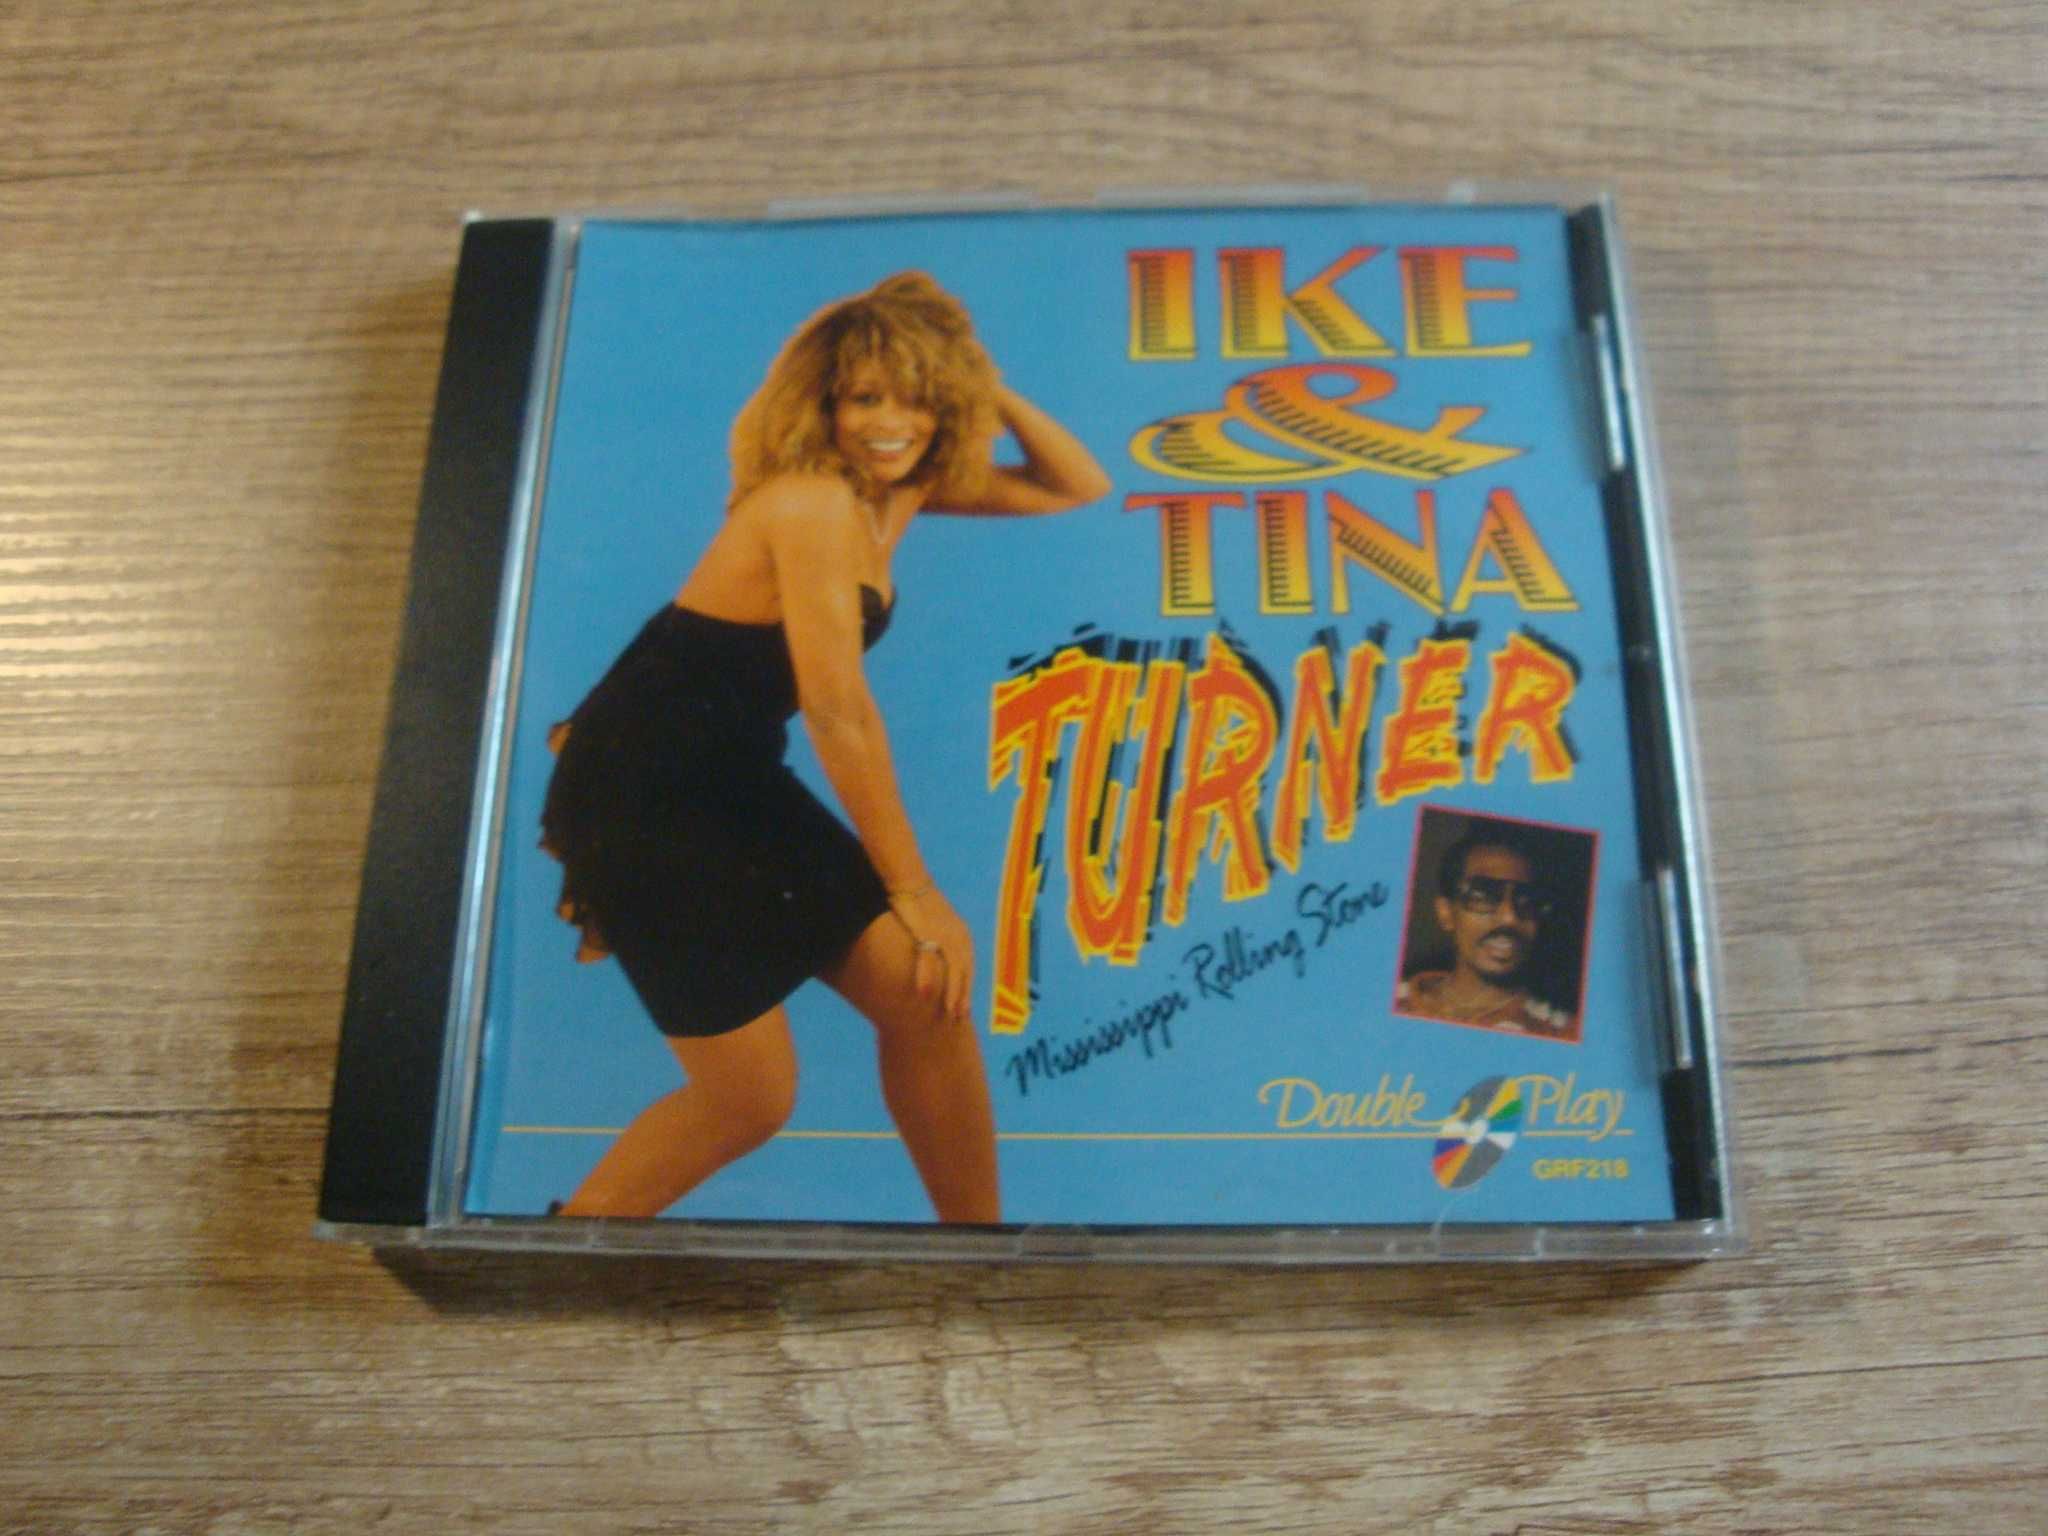 Ike & Tina Turner ‎– Mississippi Rolling Stone